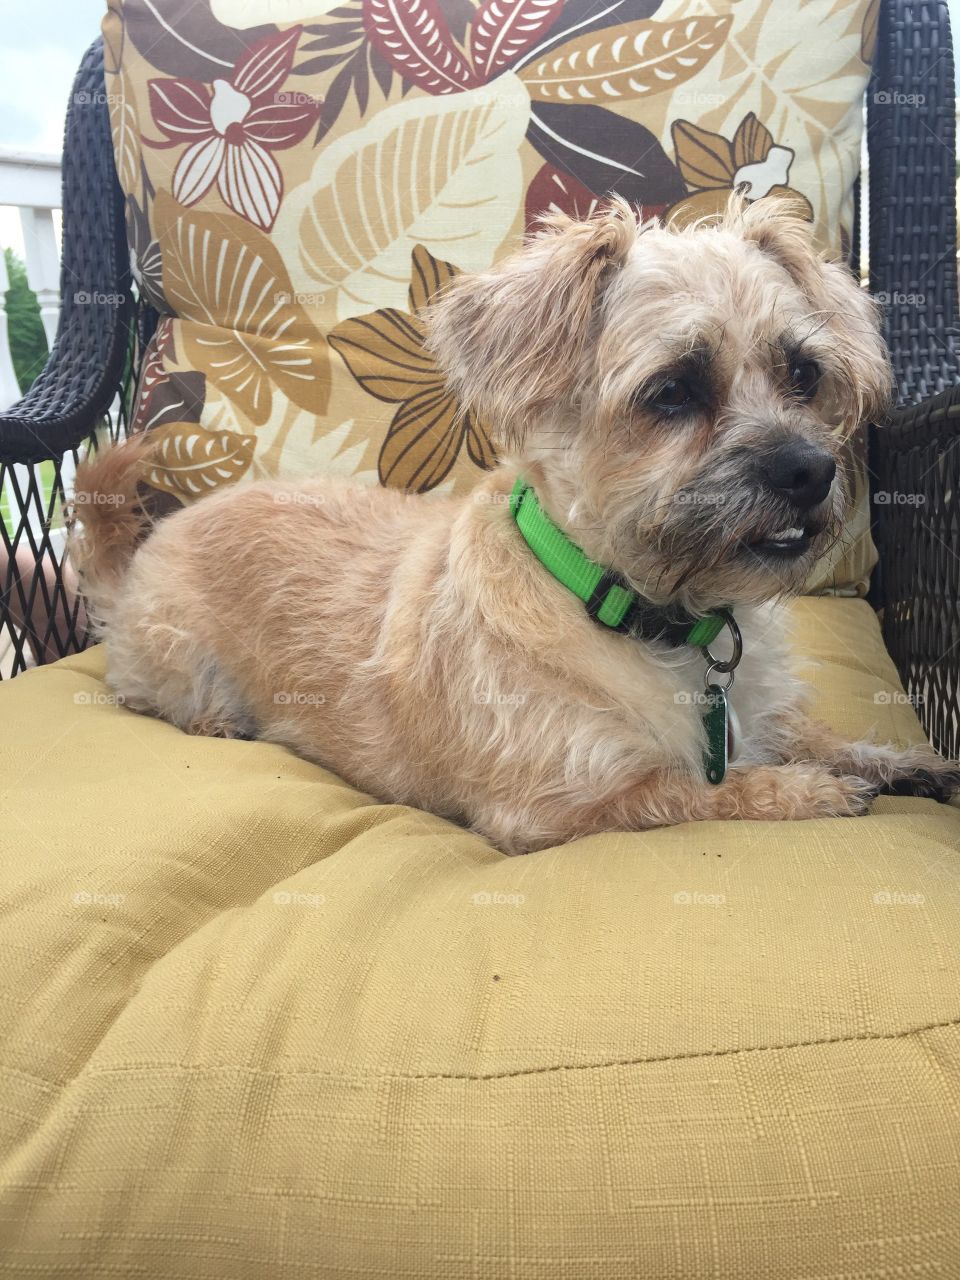 Doggo enjoying the outdoors on the patio